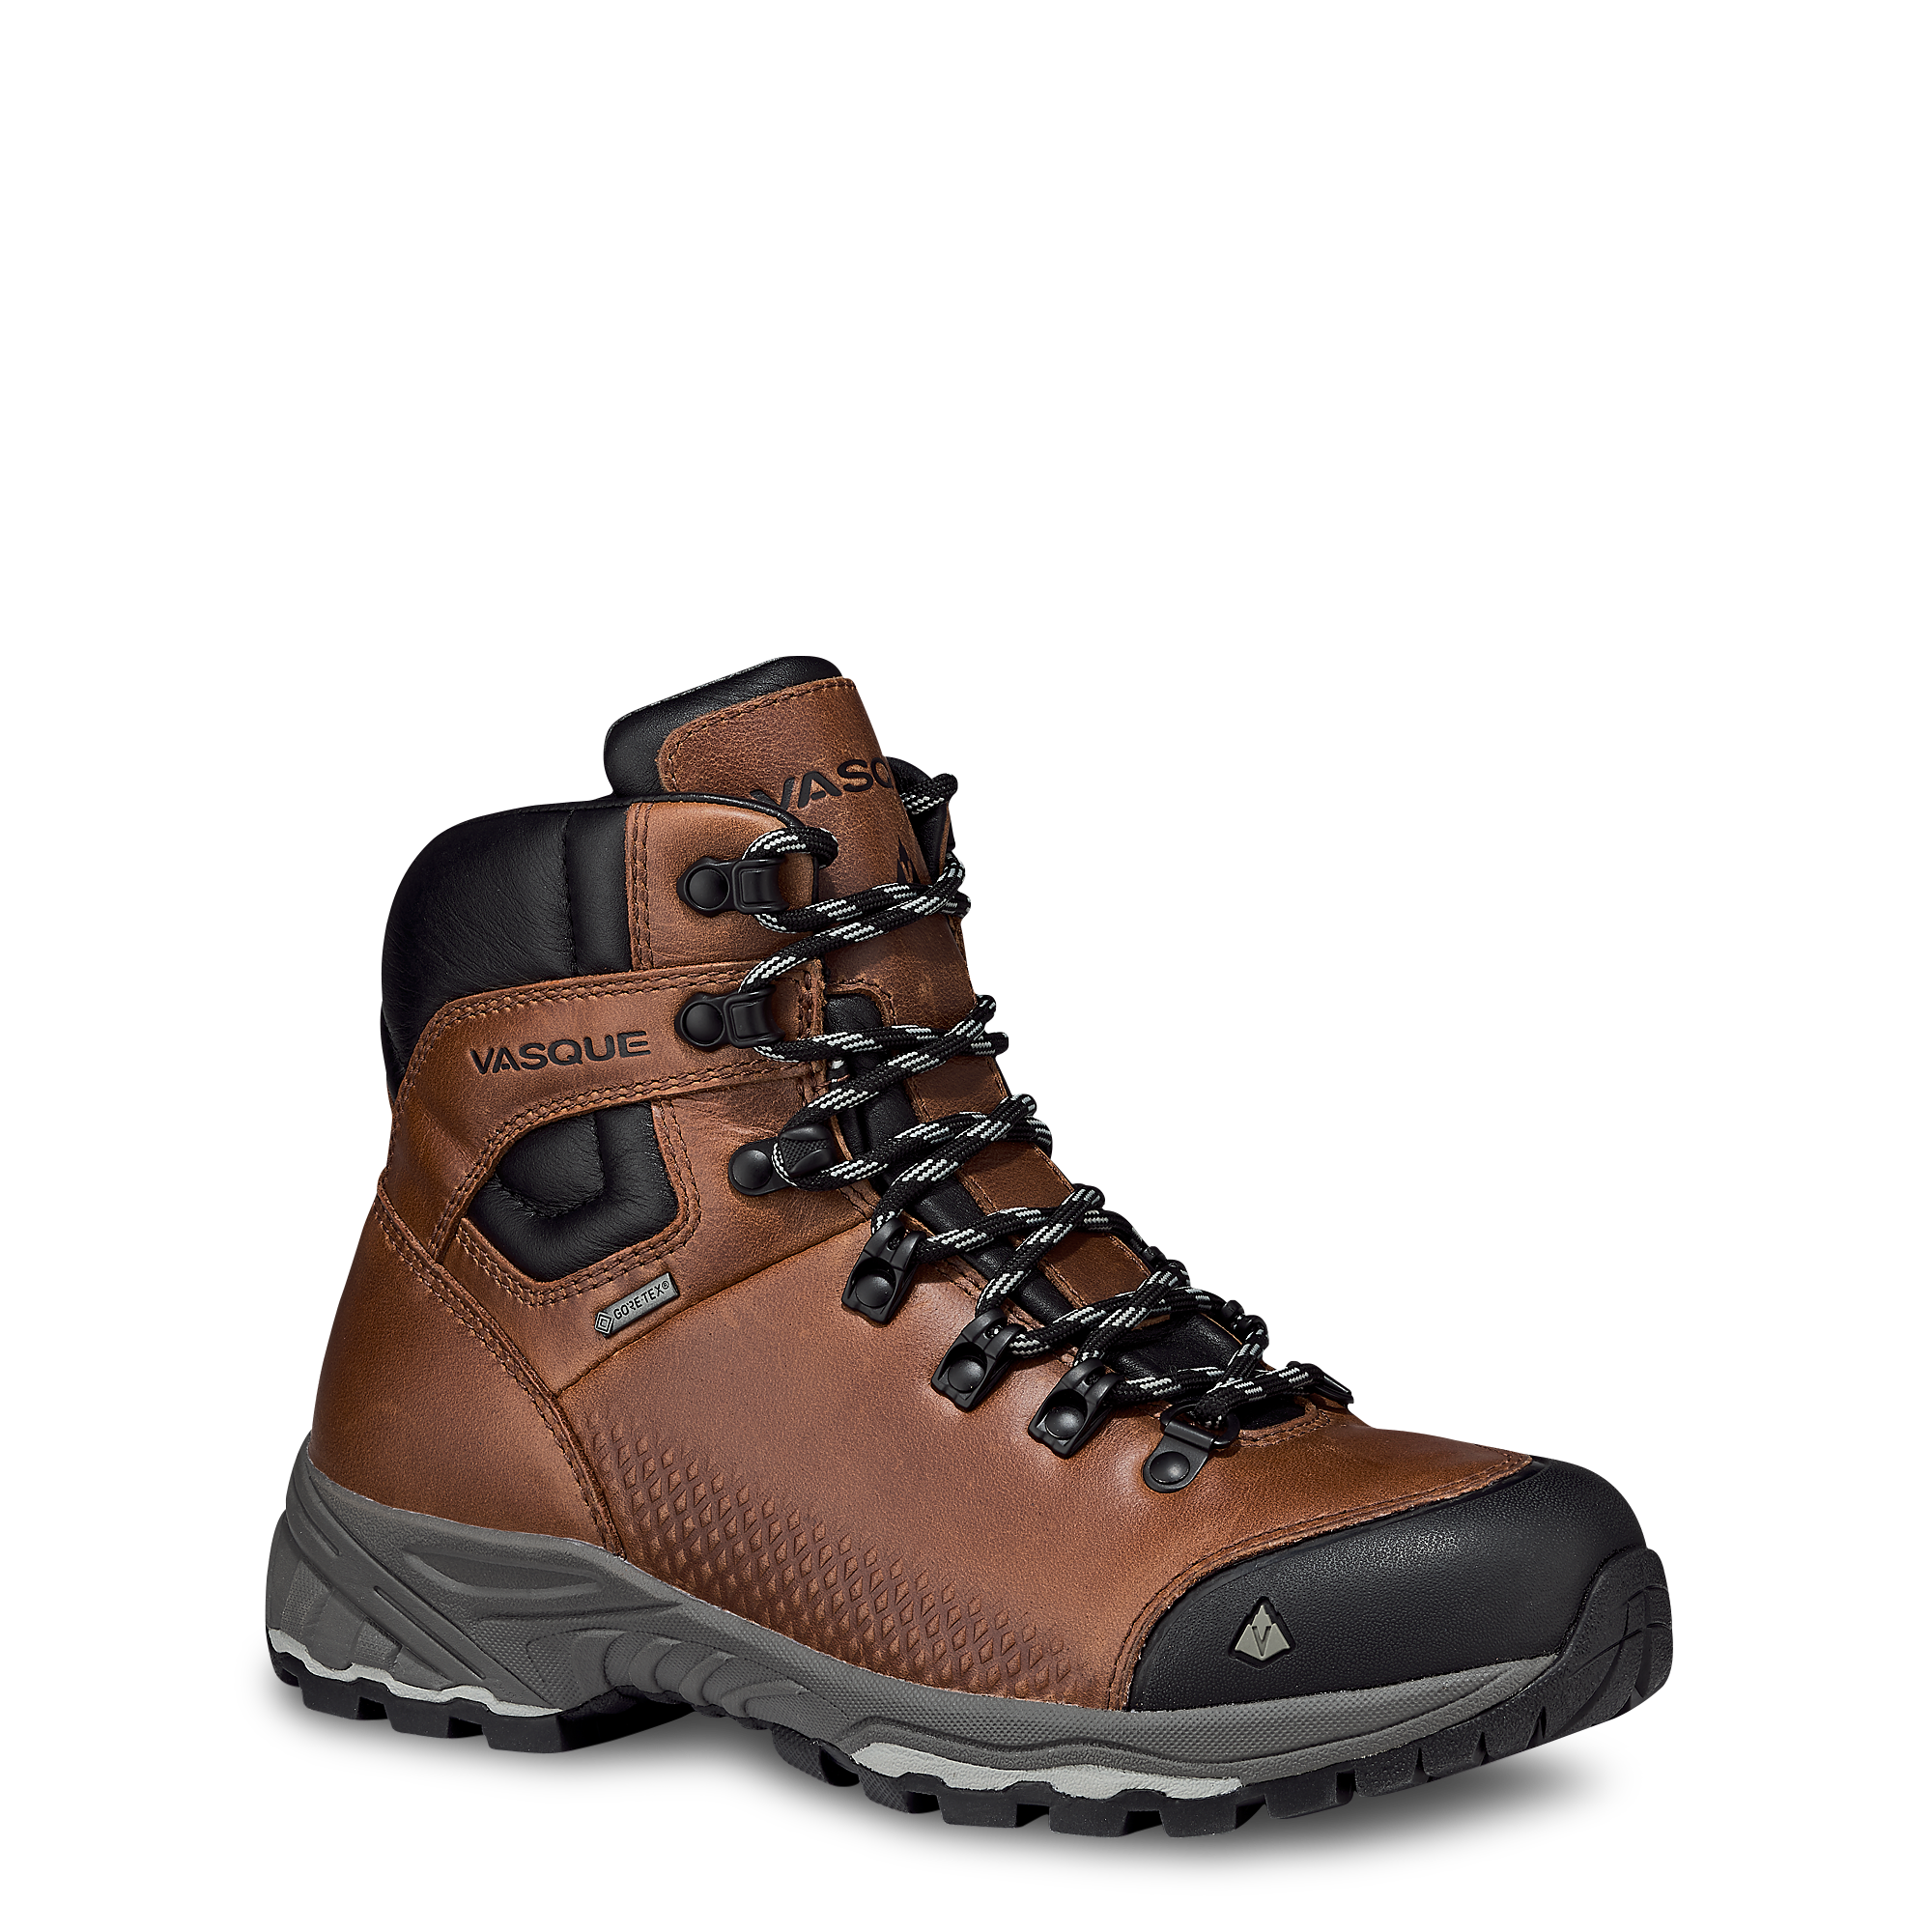 Vasque St. Elias FG GTX Waterproof Hiking Boots for Ladies - Cognac - 10.5M